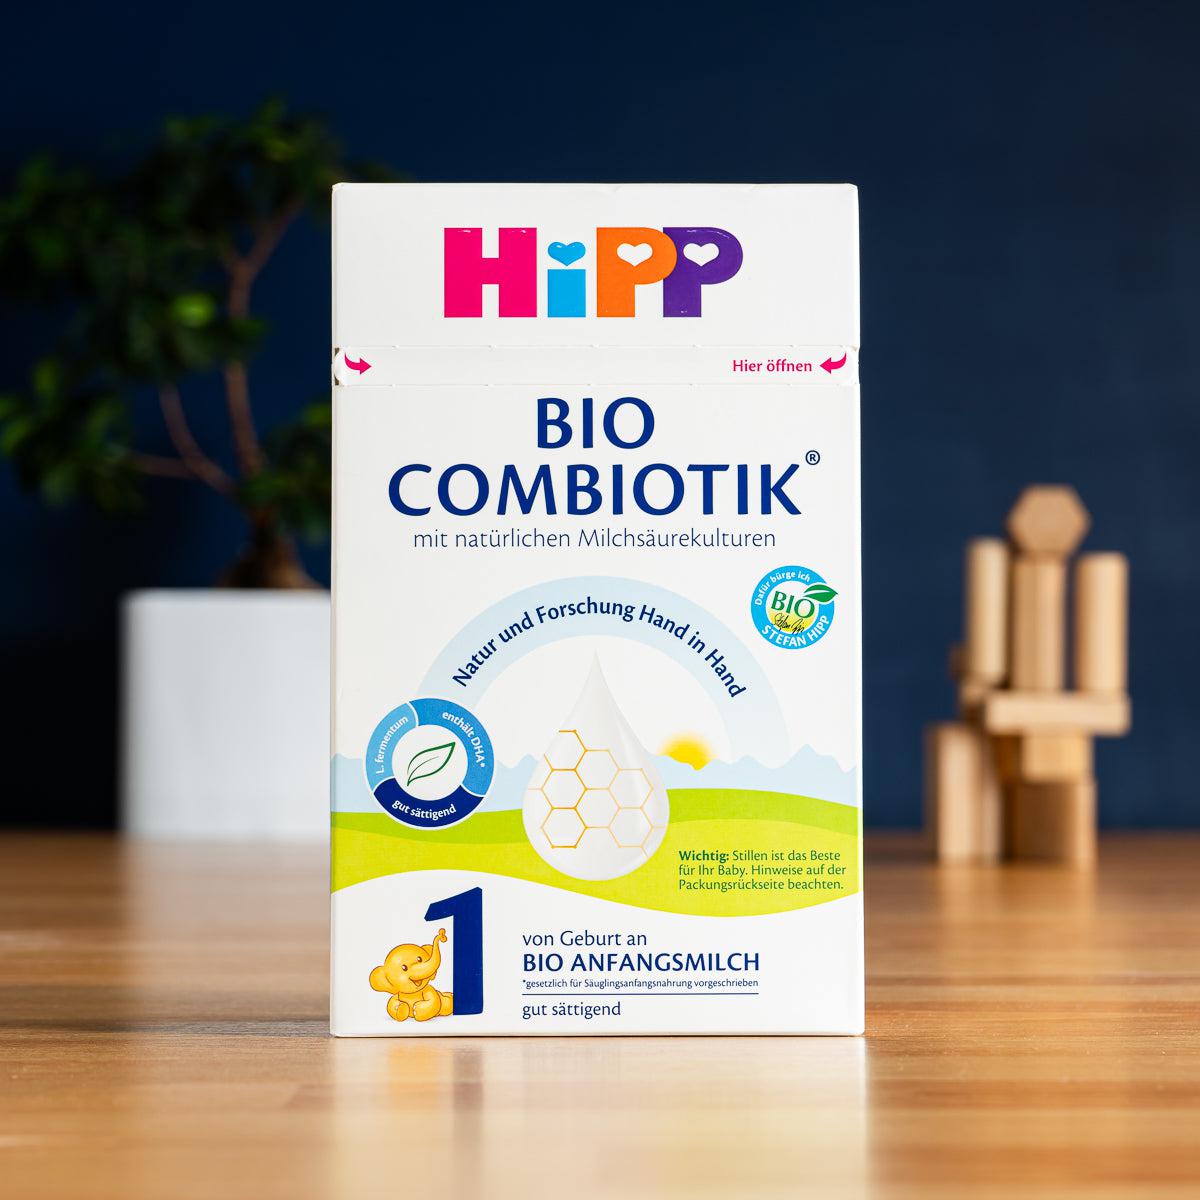 HiPP Stage 1 Organic Combiotic Formula (600g) - German Version - 24 Boxes